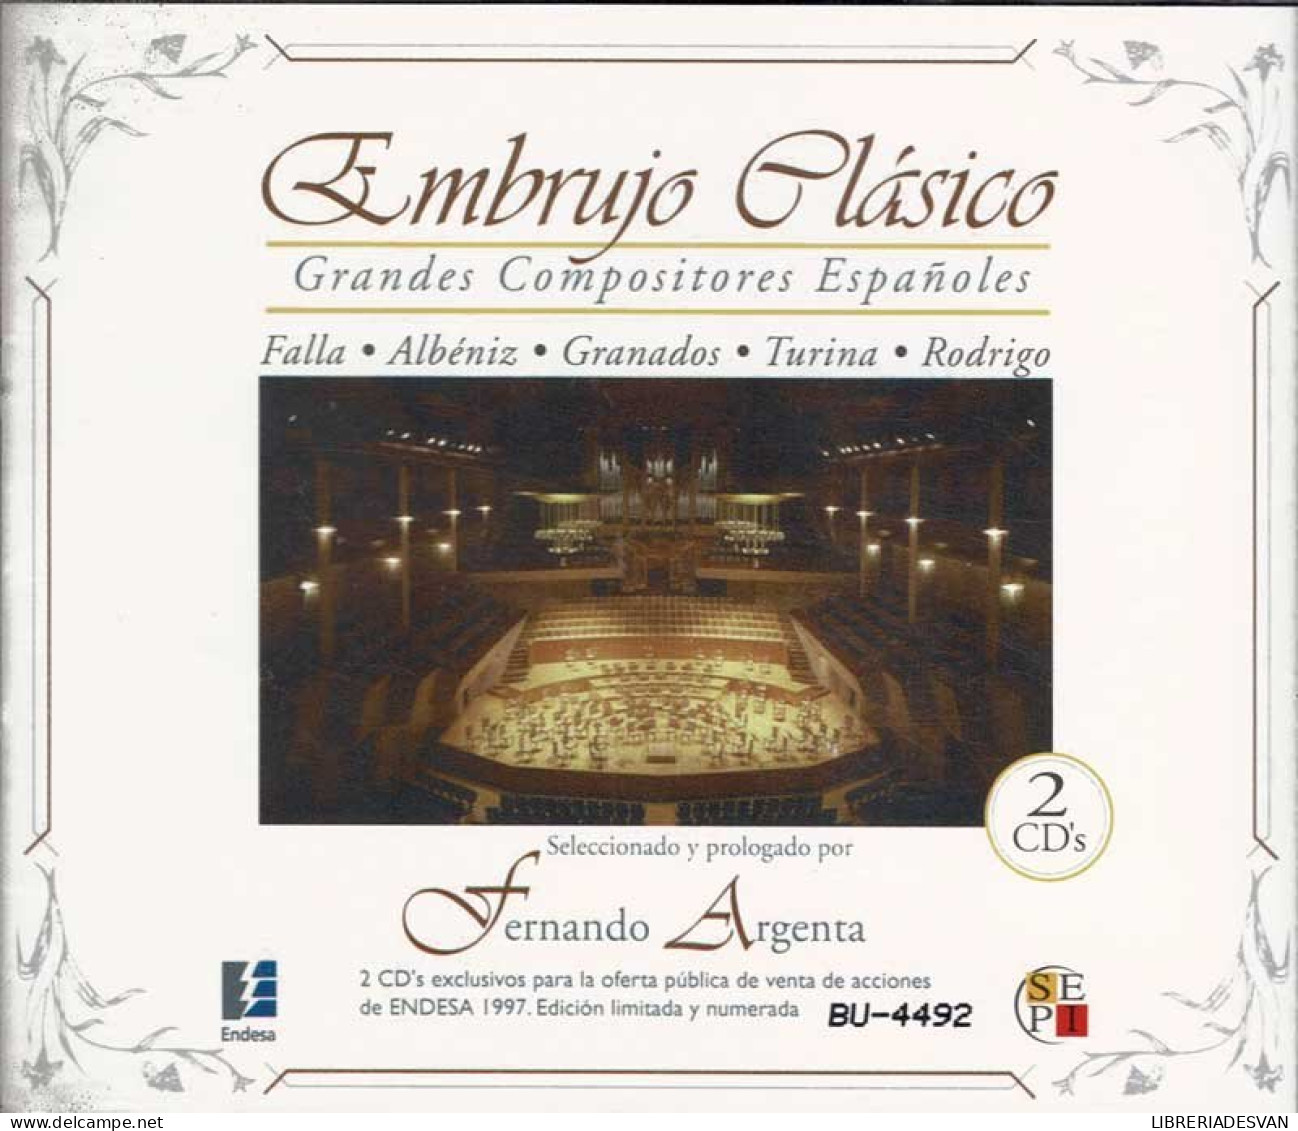 Falla, Albéniz, Granados, Turina, Rodrigo - Embrujo Clásico. Grandes Compositores Españoles. 2 X CD - Clásica